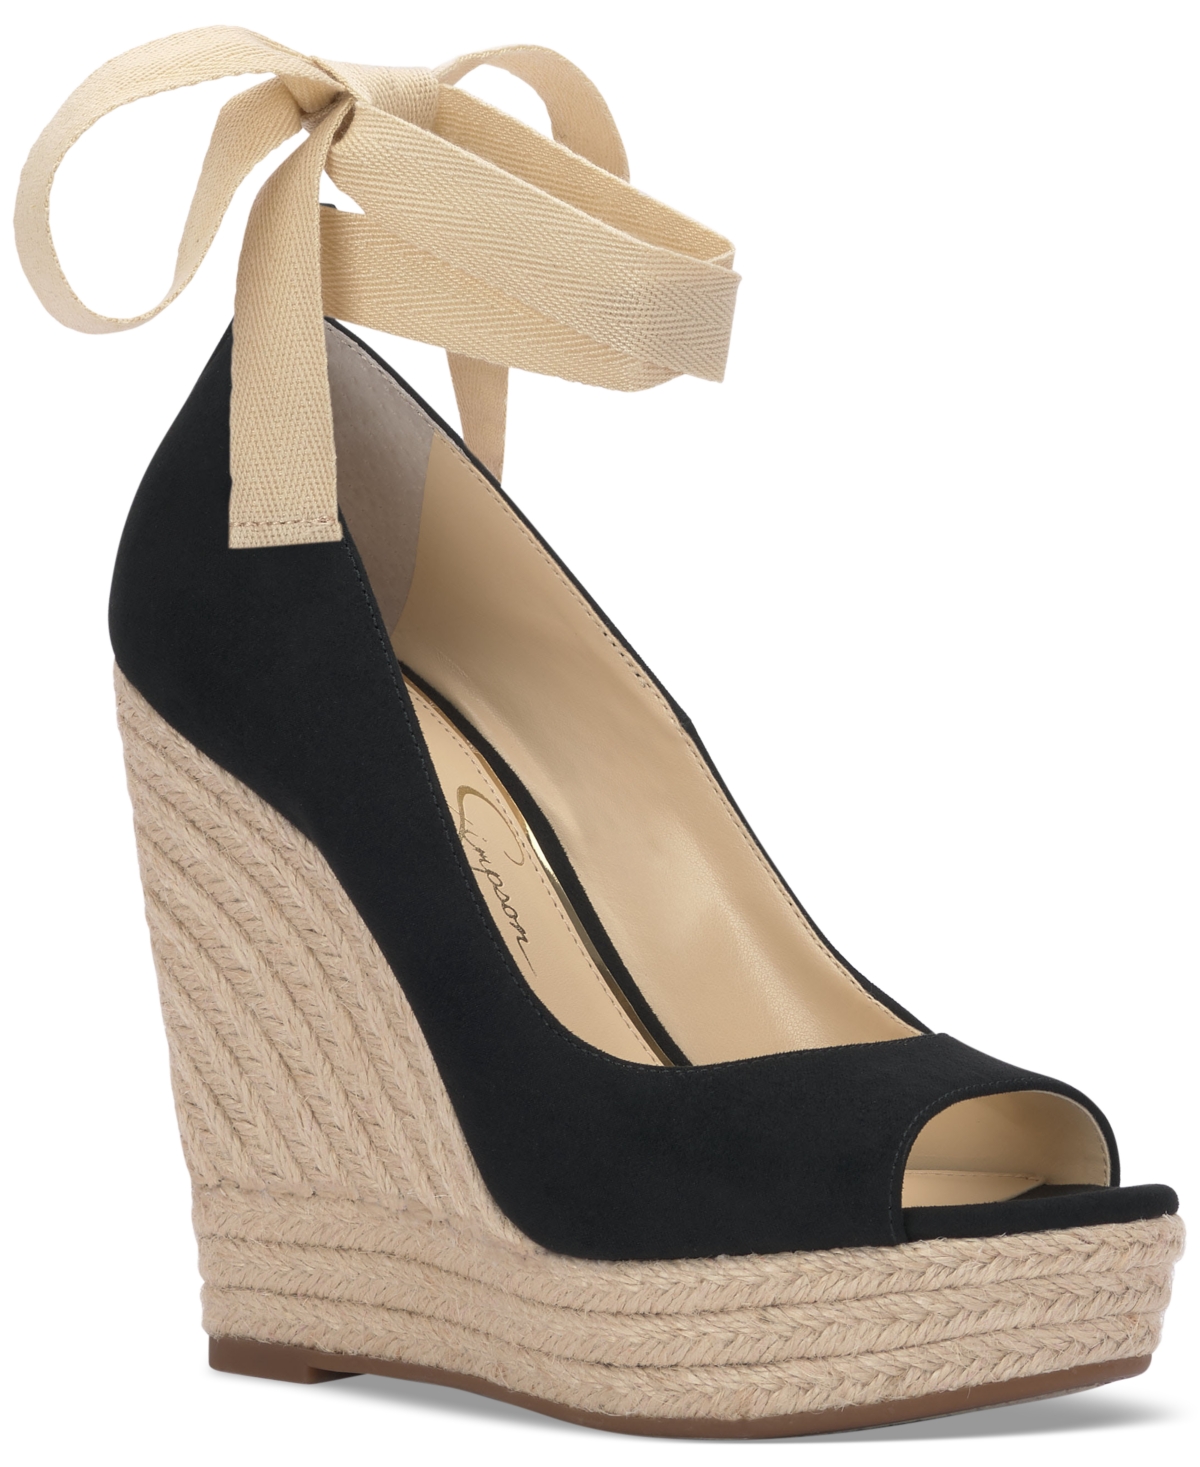 Jessica Simpson Zavida Ankle-Tie Espadrille Platform Wedge Sandals Women's Shoes